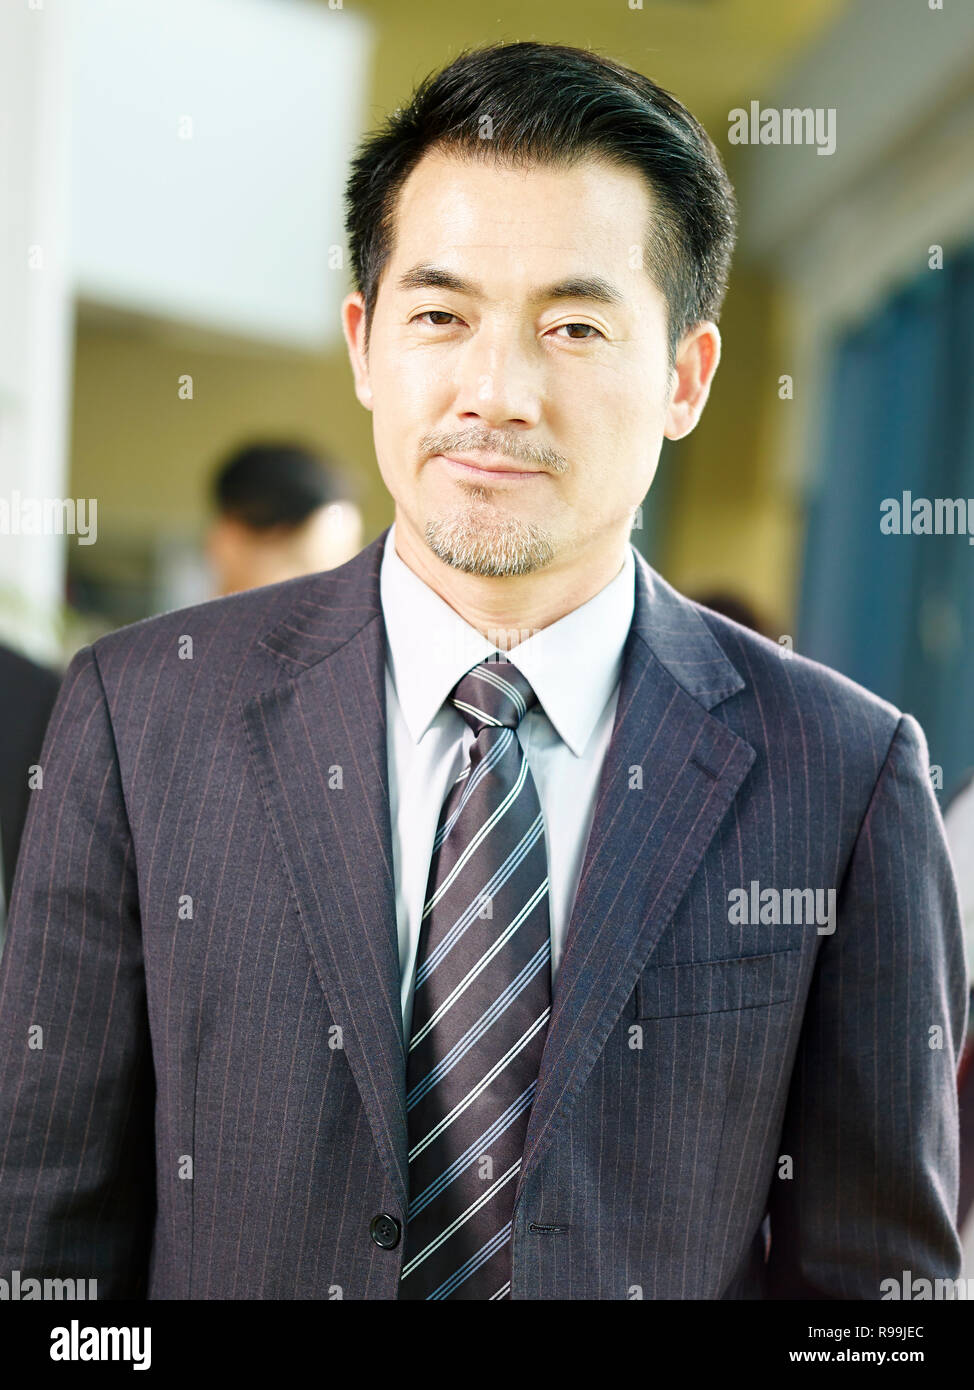 Retrato de un alto ejecutivo de empresa asiática, mirando a la cámara. Foto de stock